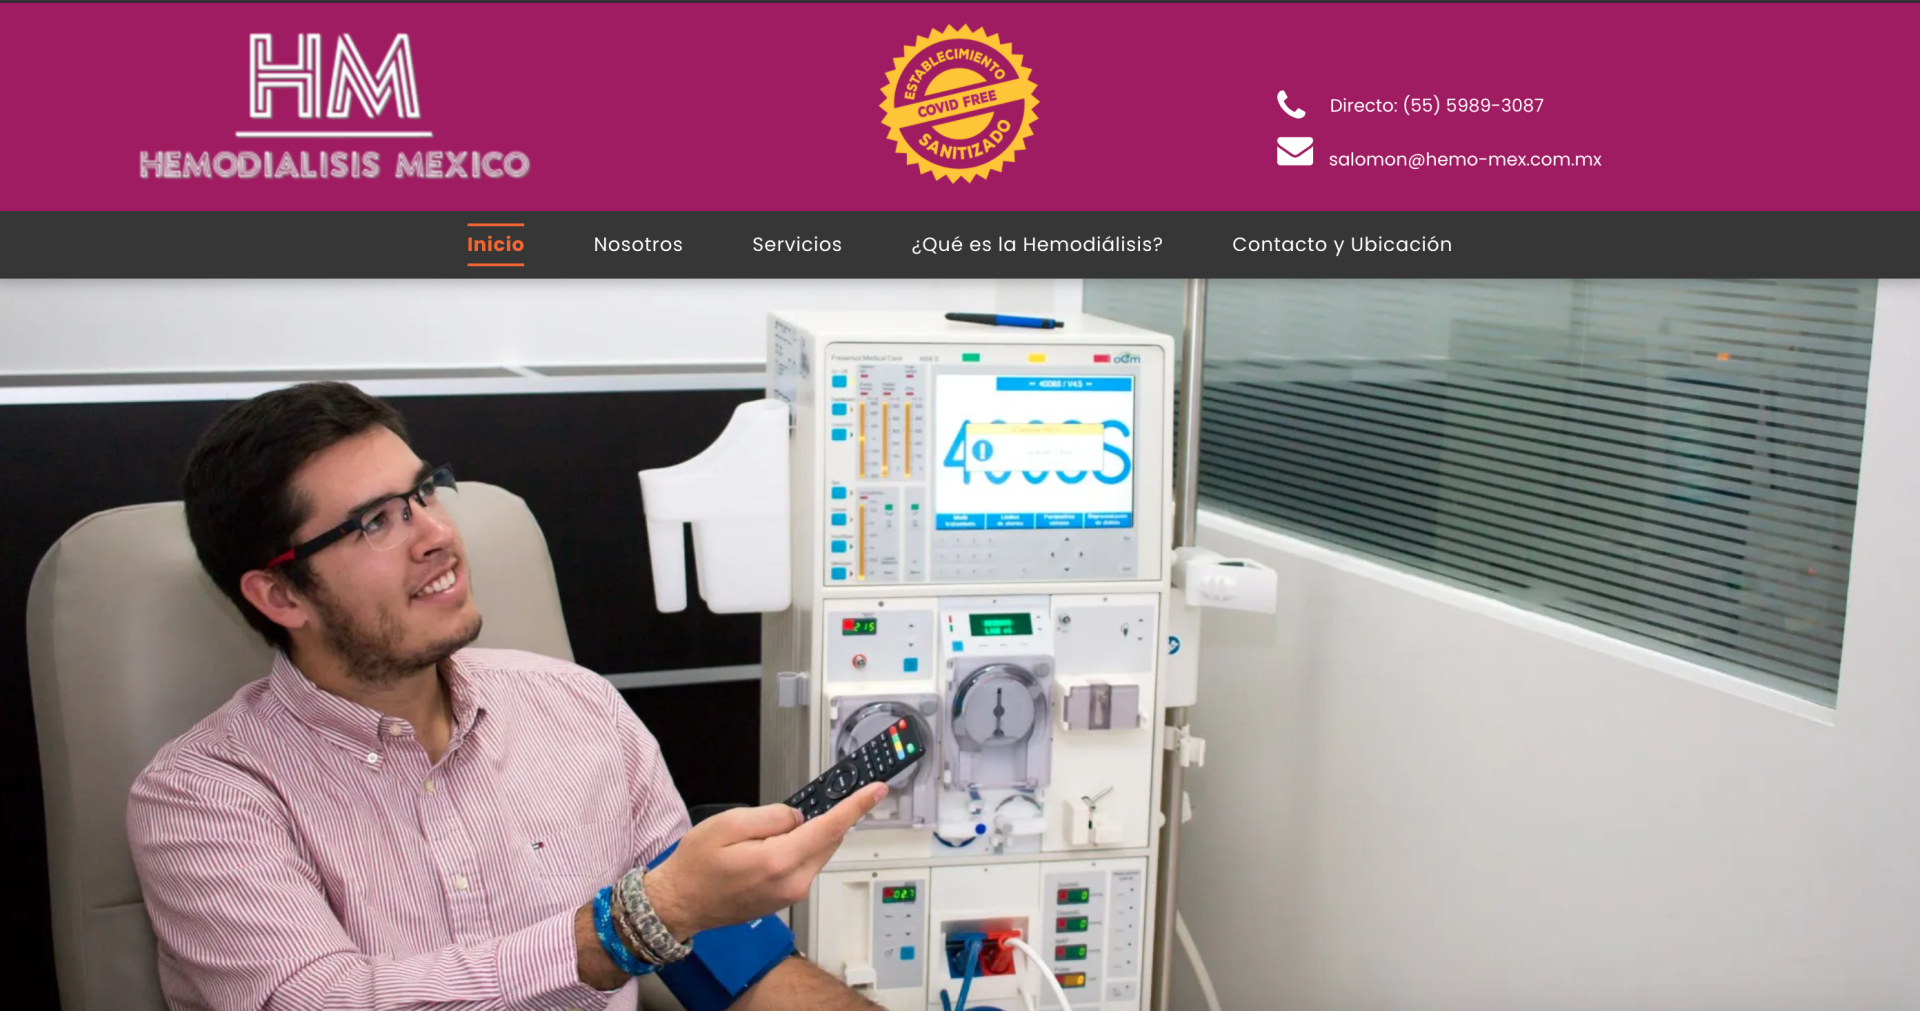 A screenshot of Hemodialysis Mexico